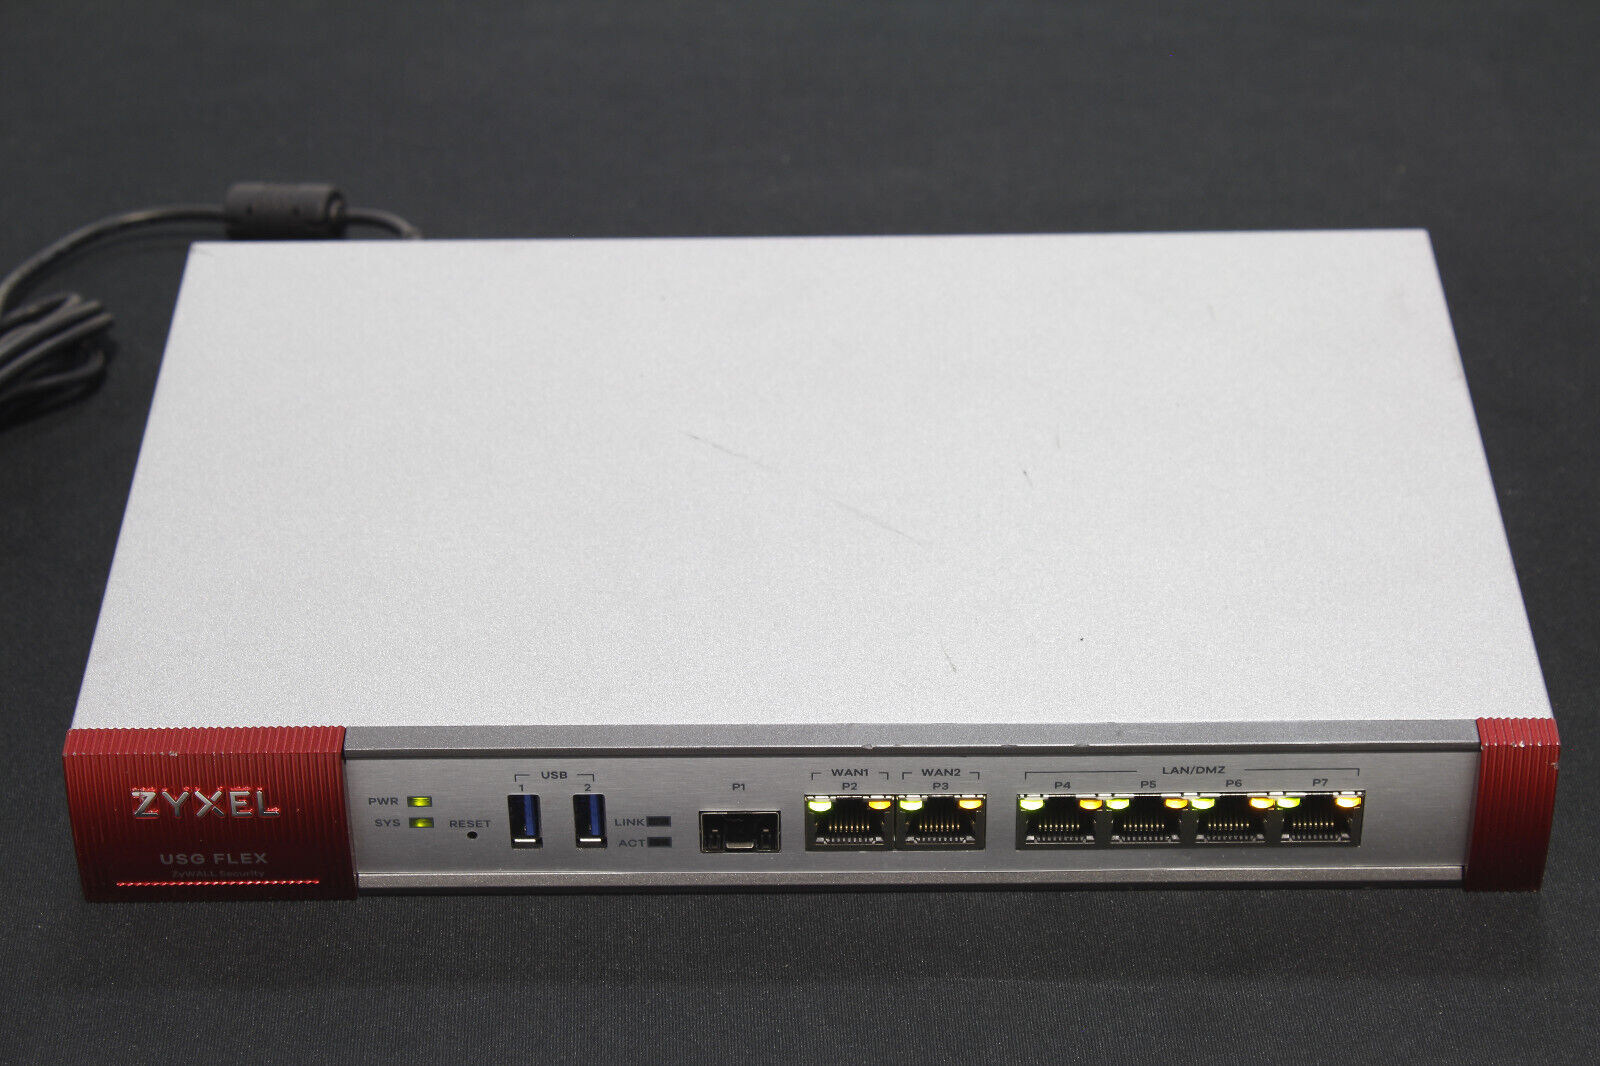 Zyxel USG FLEX 200 Network Security Firewall Device 6-Port Gigabit Ethernet USB